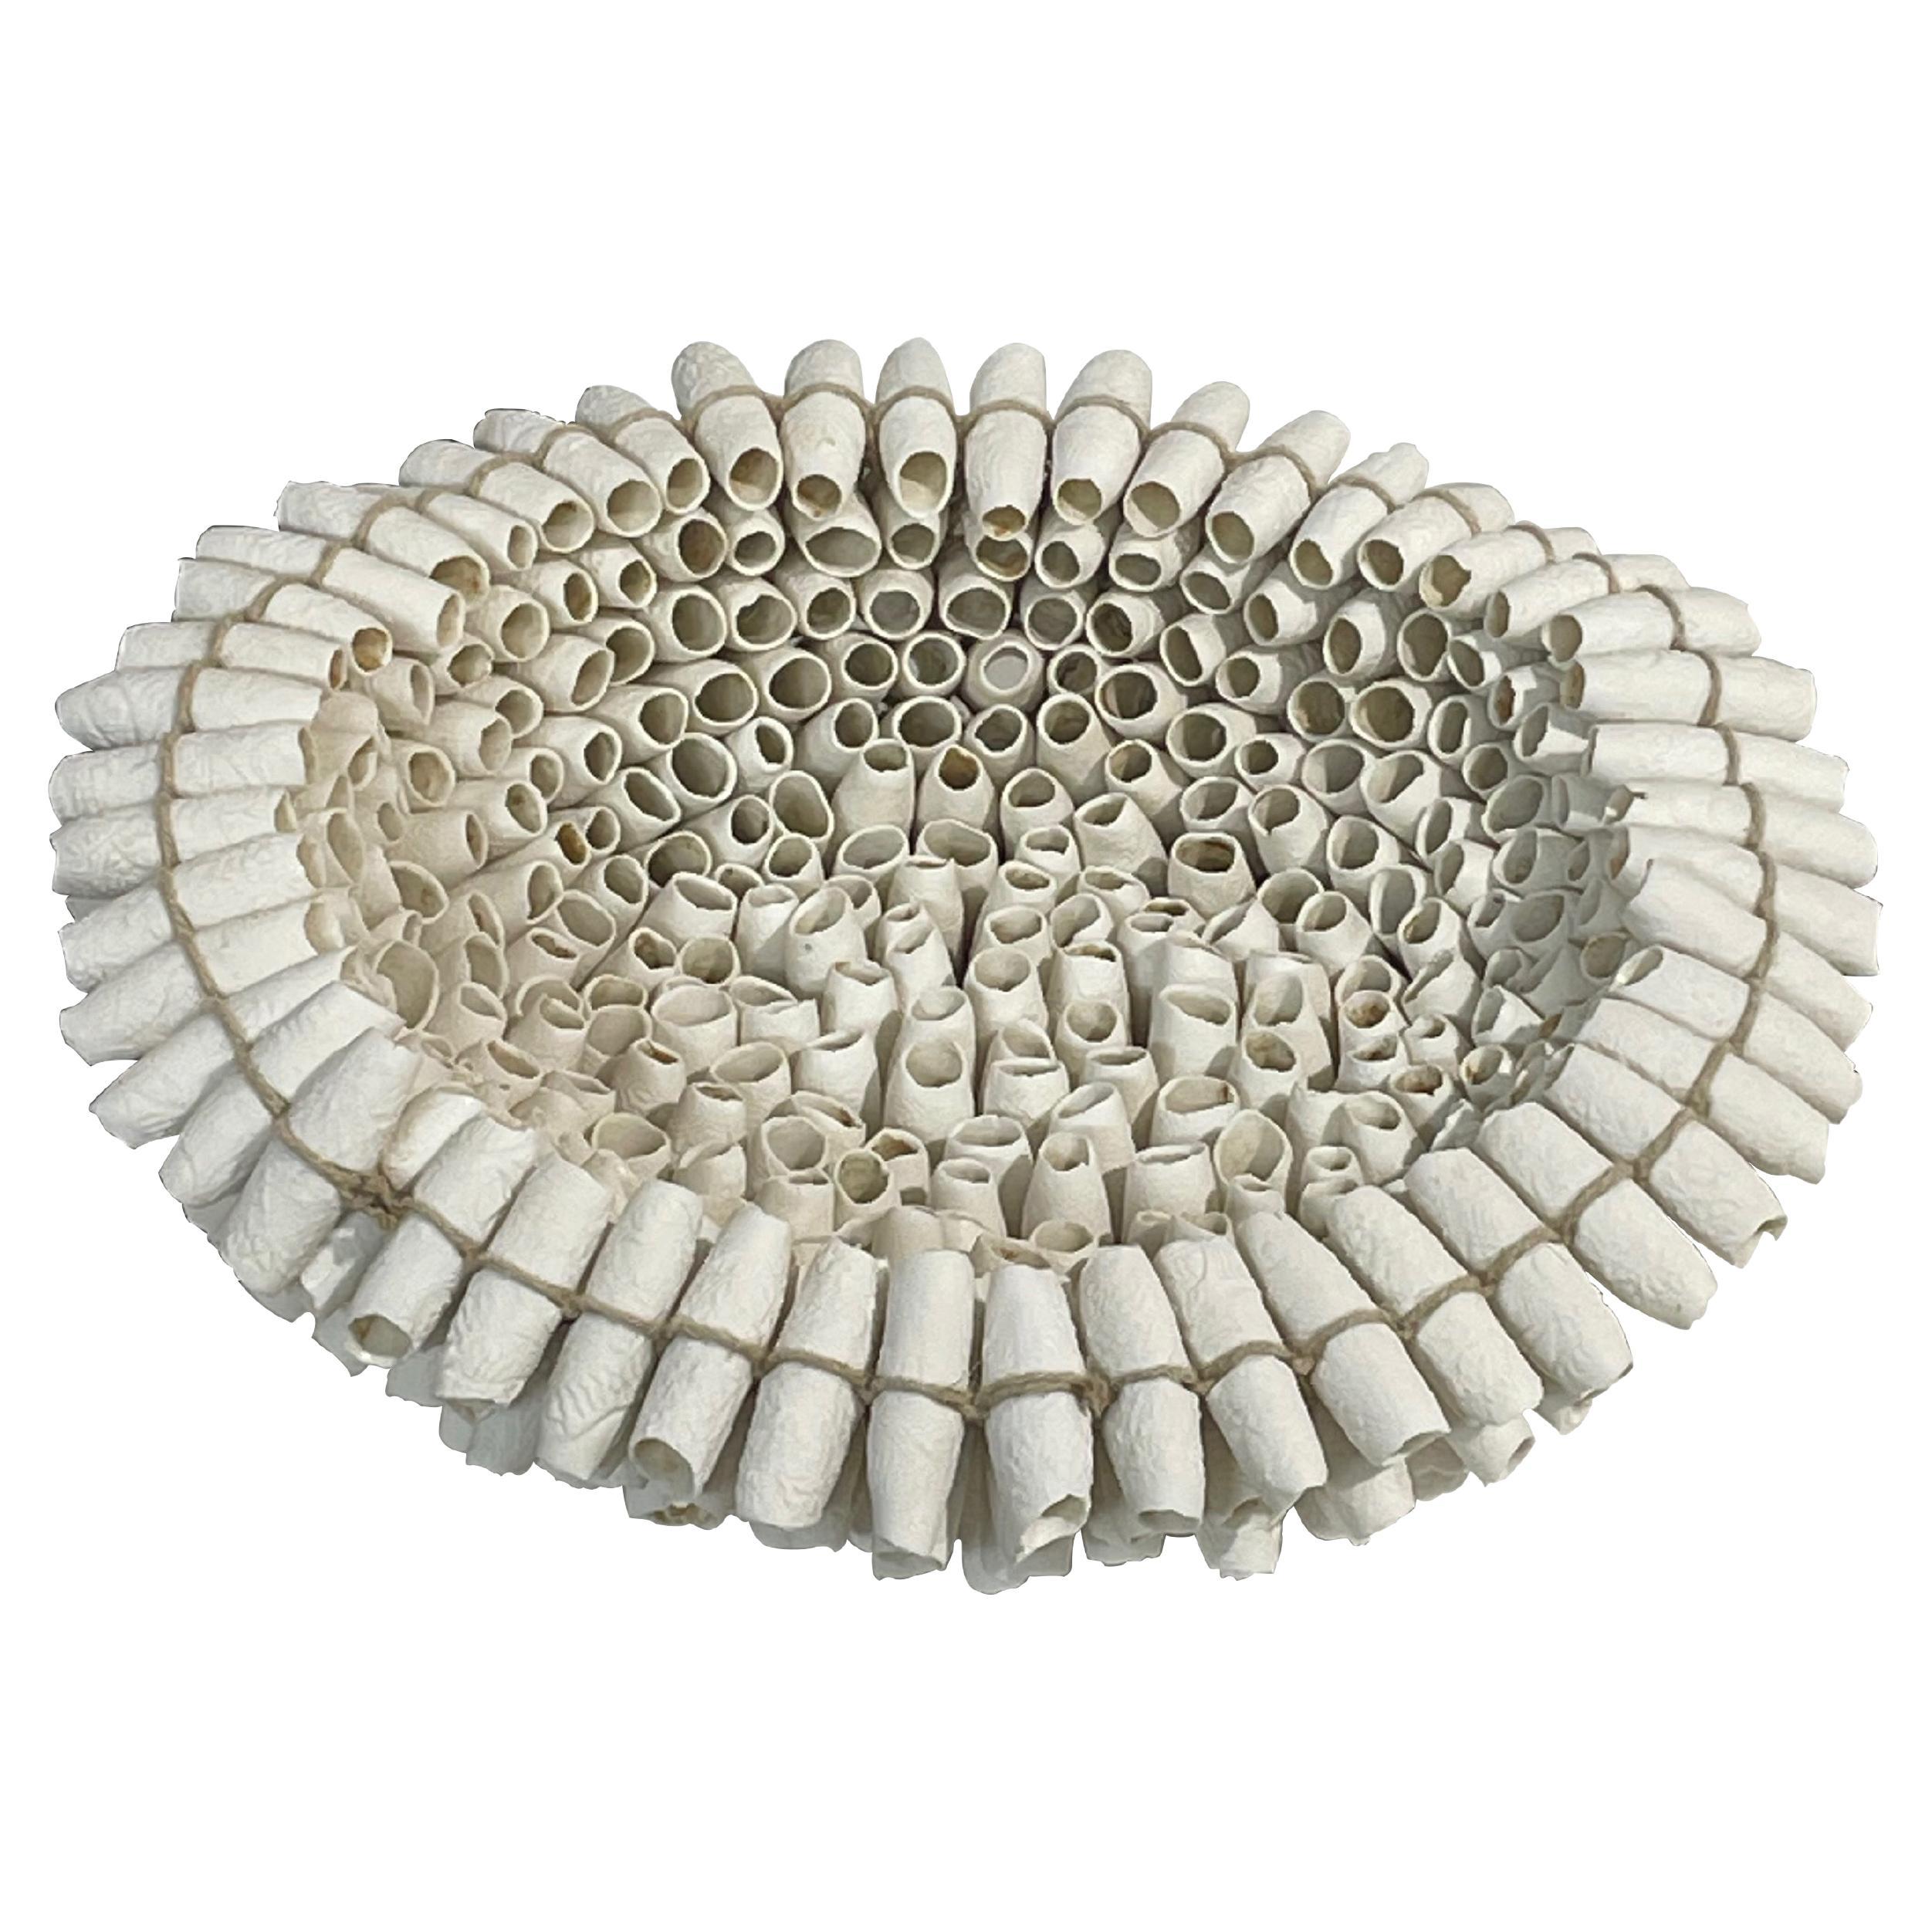 White Porcelain Tubular Shapes Bowl, France, Contemporary